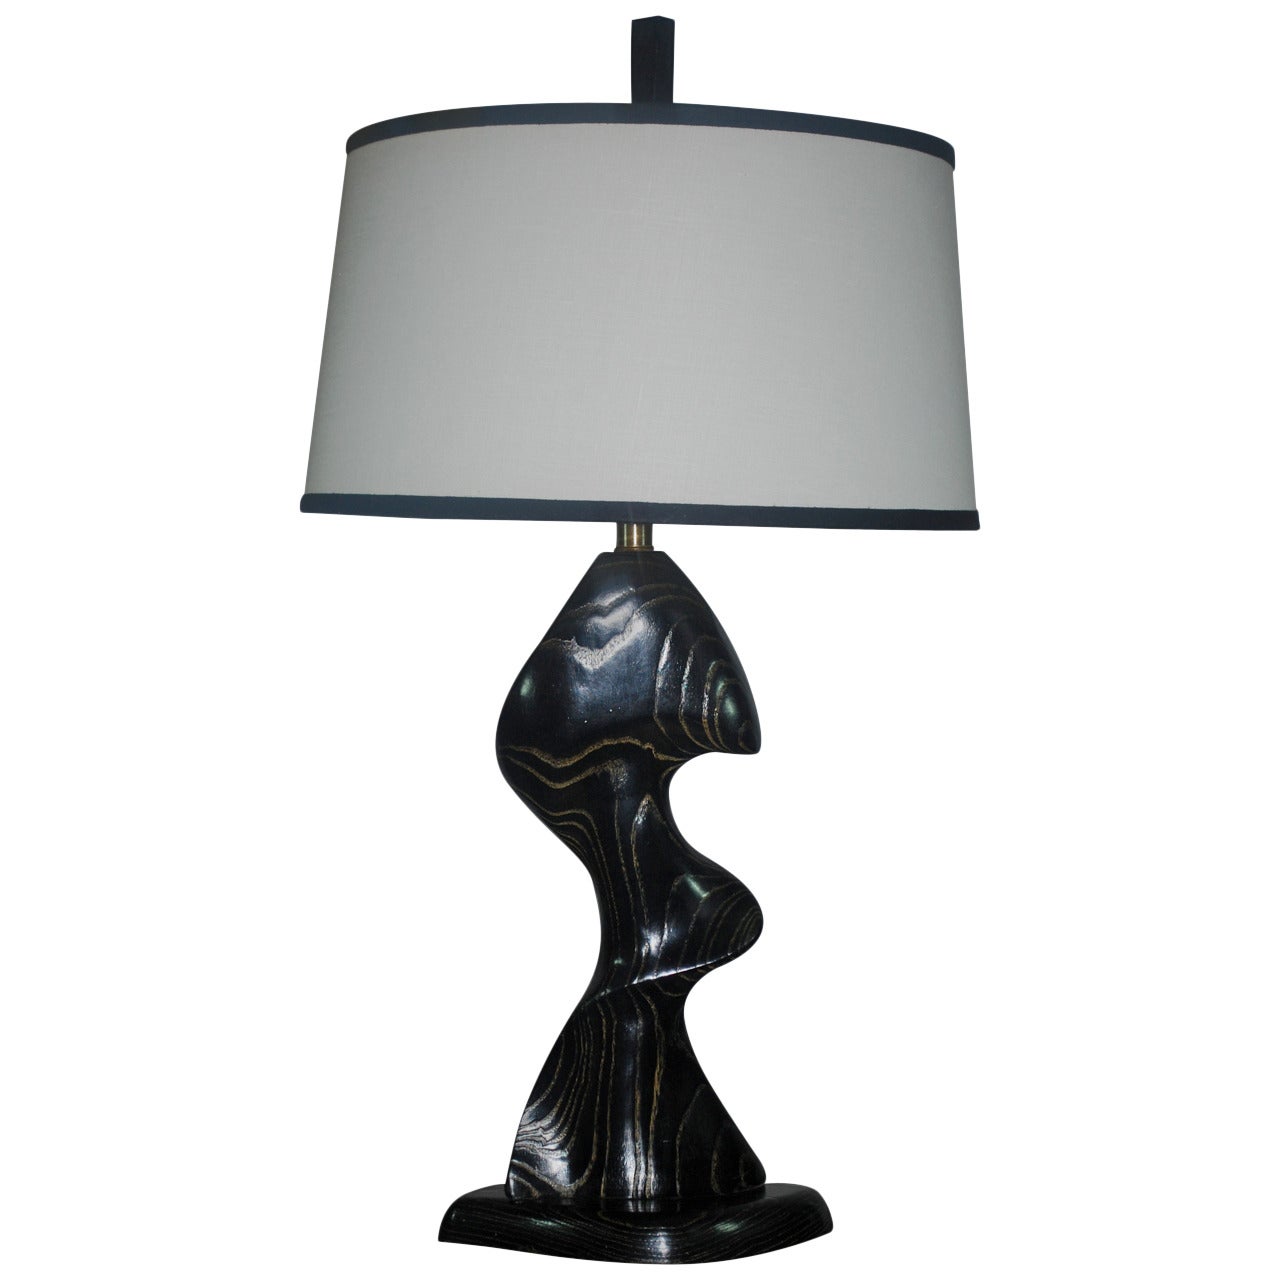 Heifetz Style Table Lamp For Sale